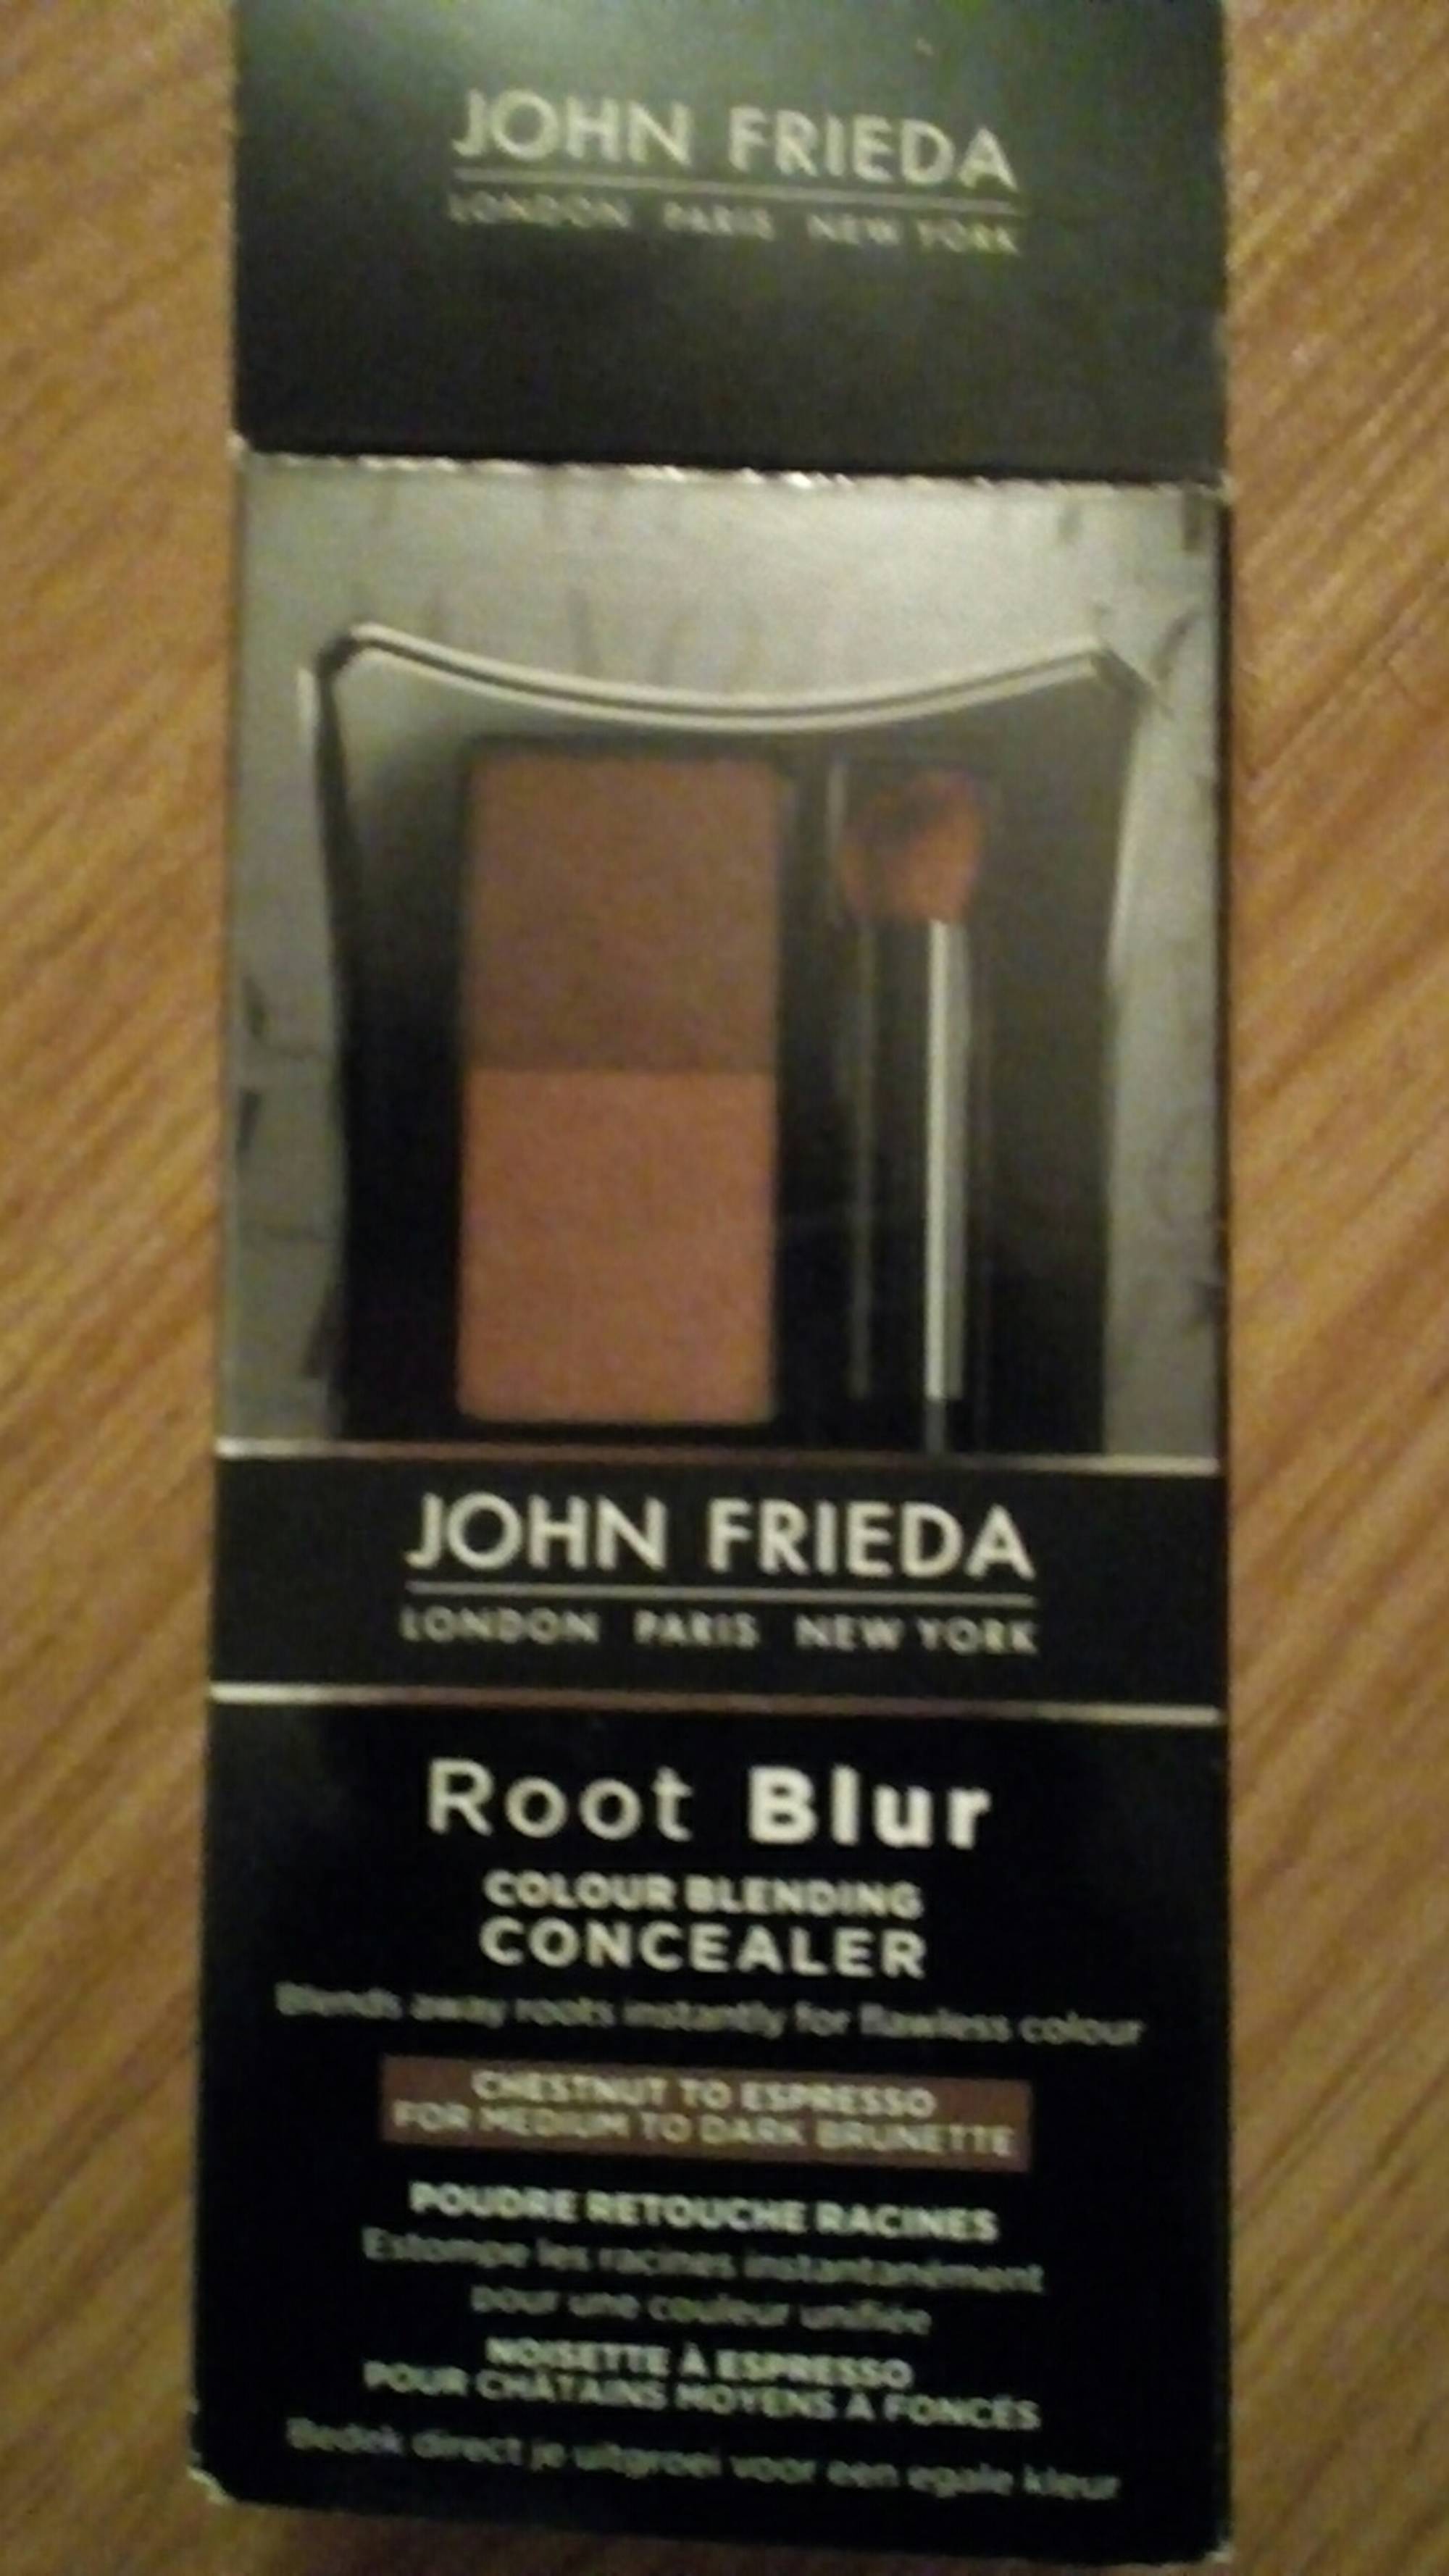 JOHN FRIEDA - Root blur - Poudre retouche racines